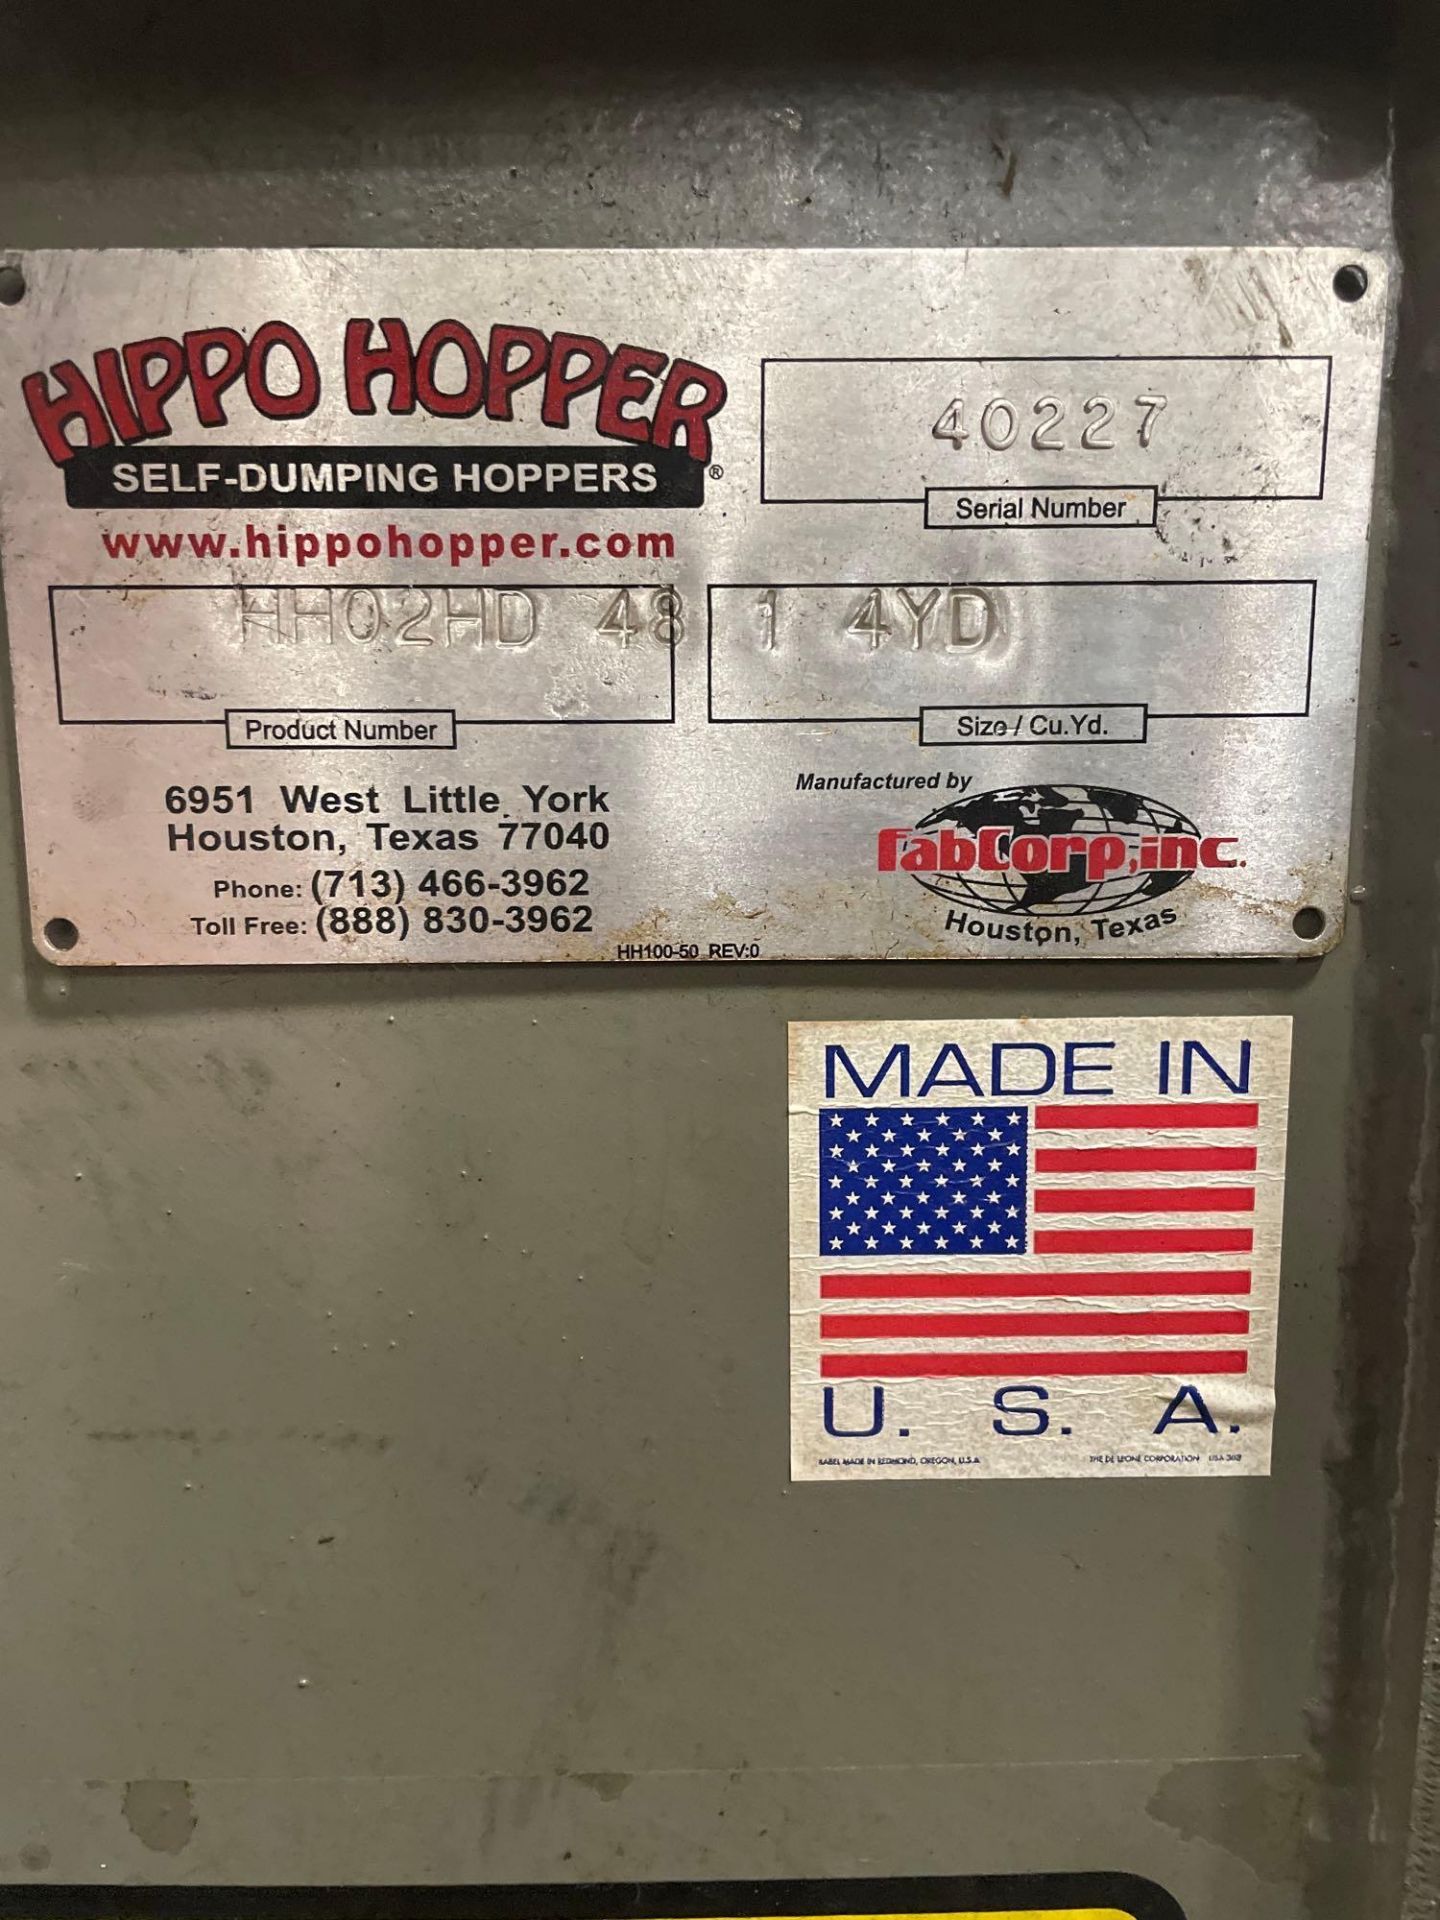 FabCorp 4-Yard HH02HD-48 Hippo Hopper Portable Self Dumping Hopper S/N 40227 - Image 8 of 8